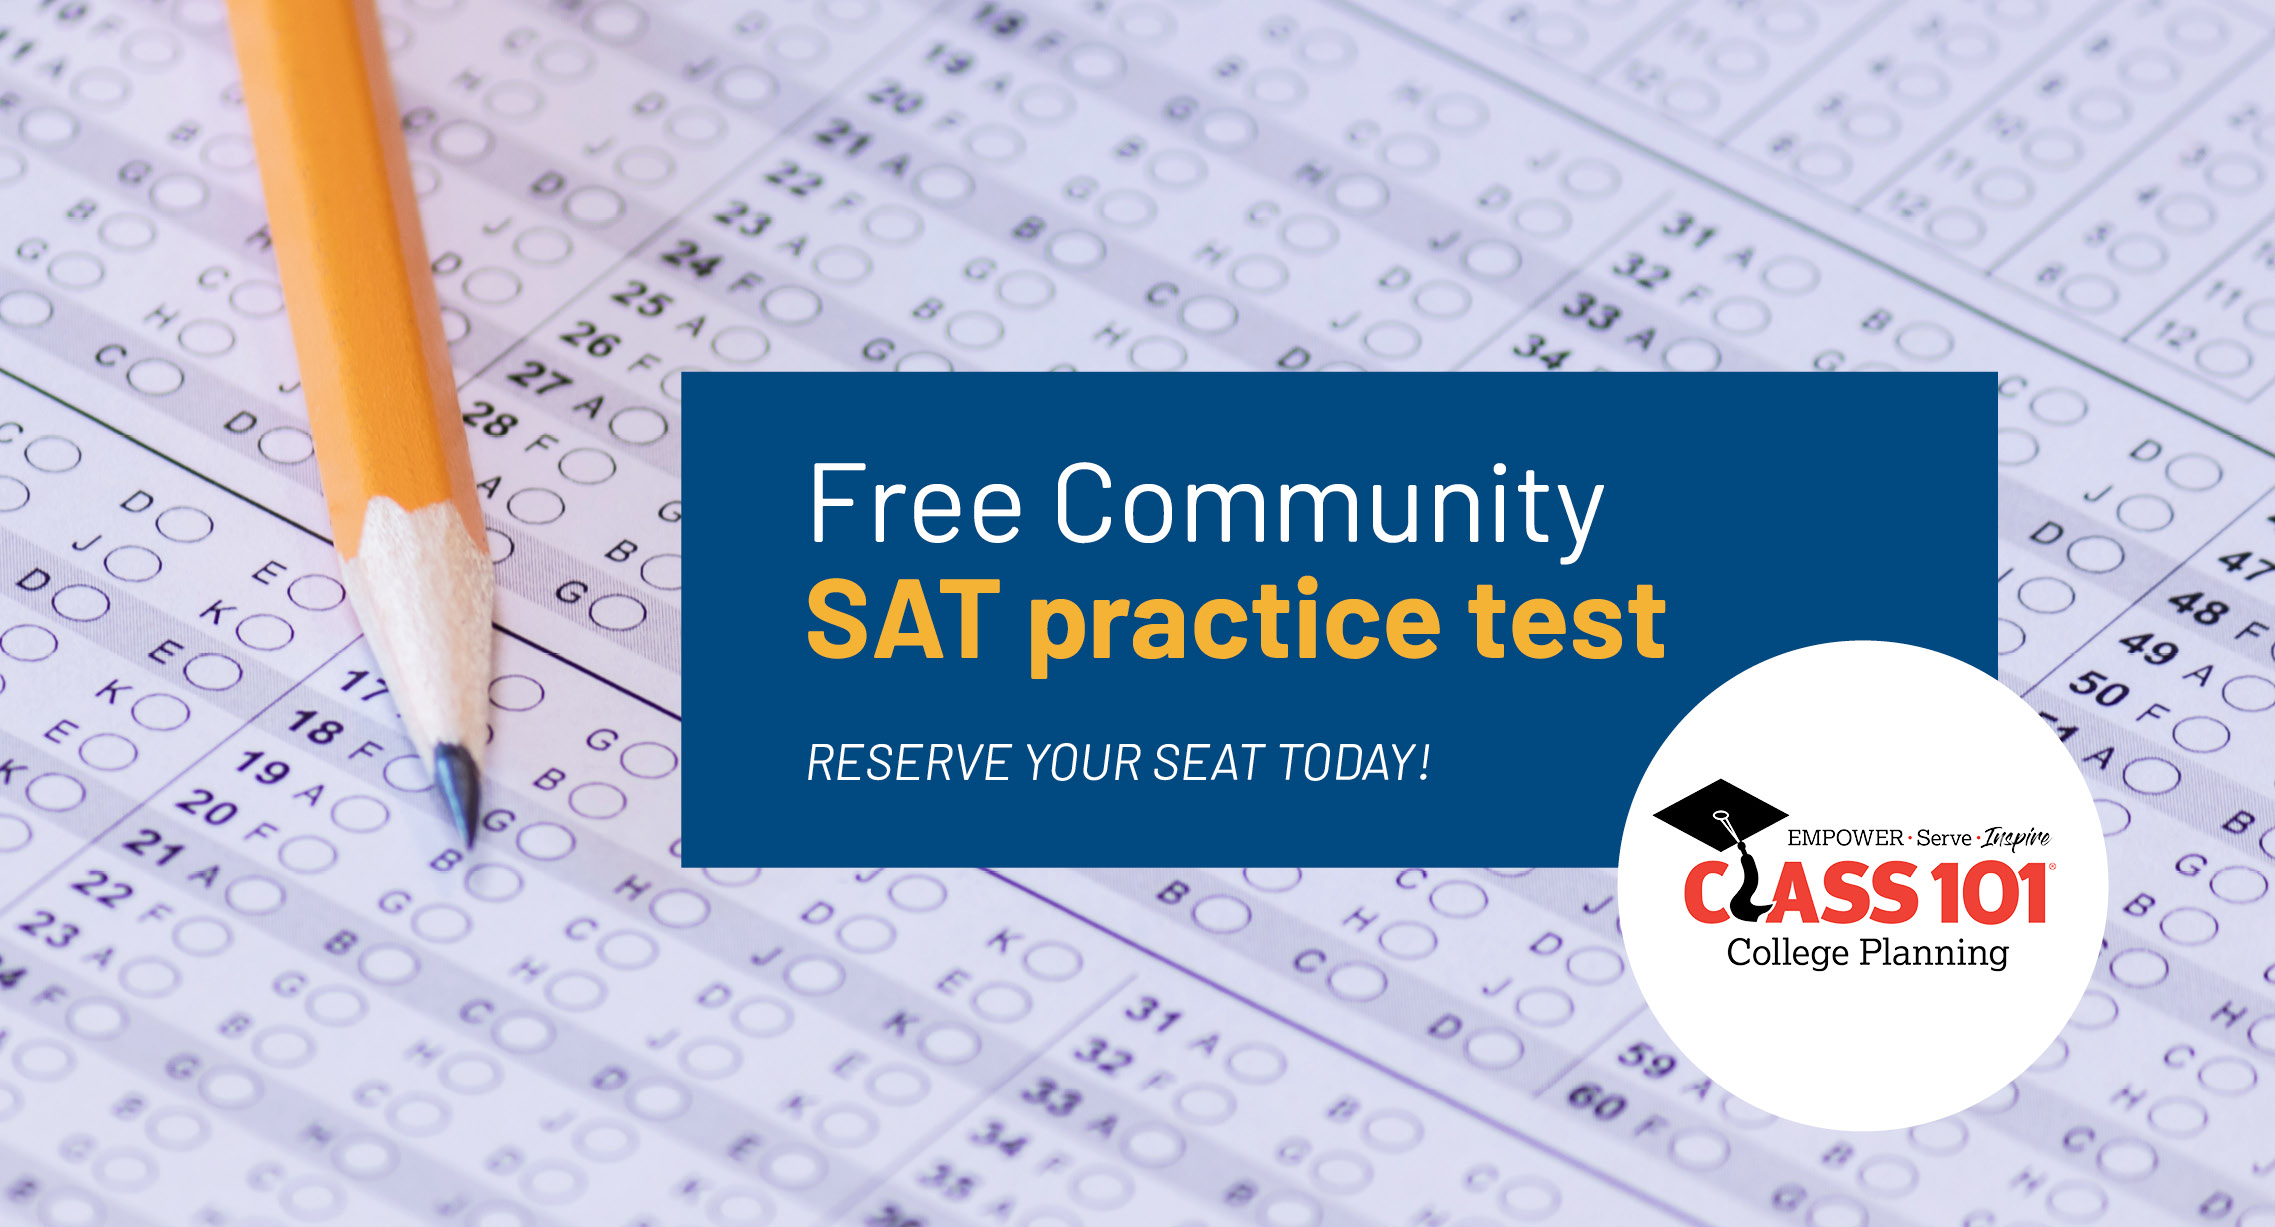 Free SAT Practice Test